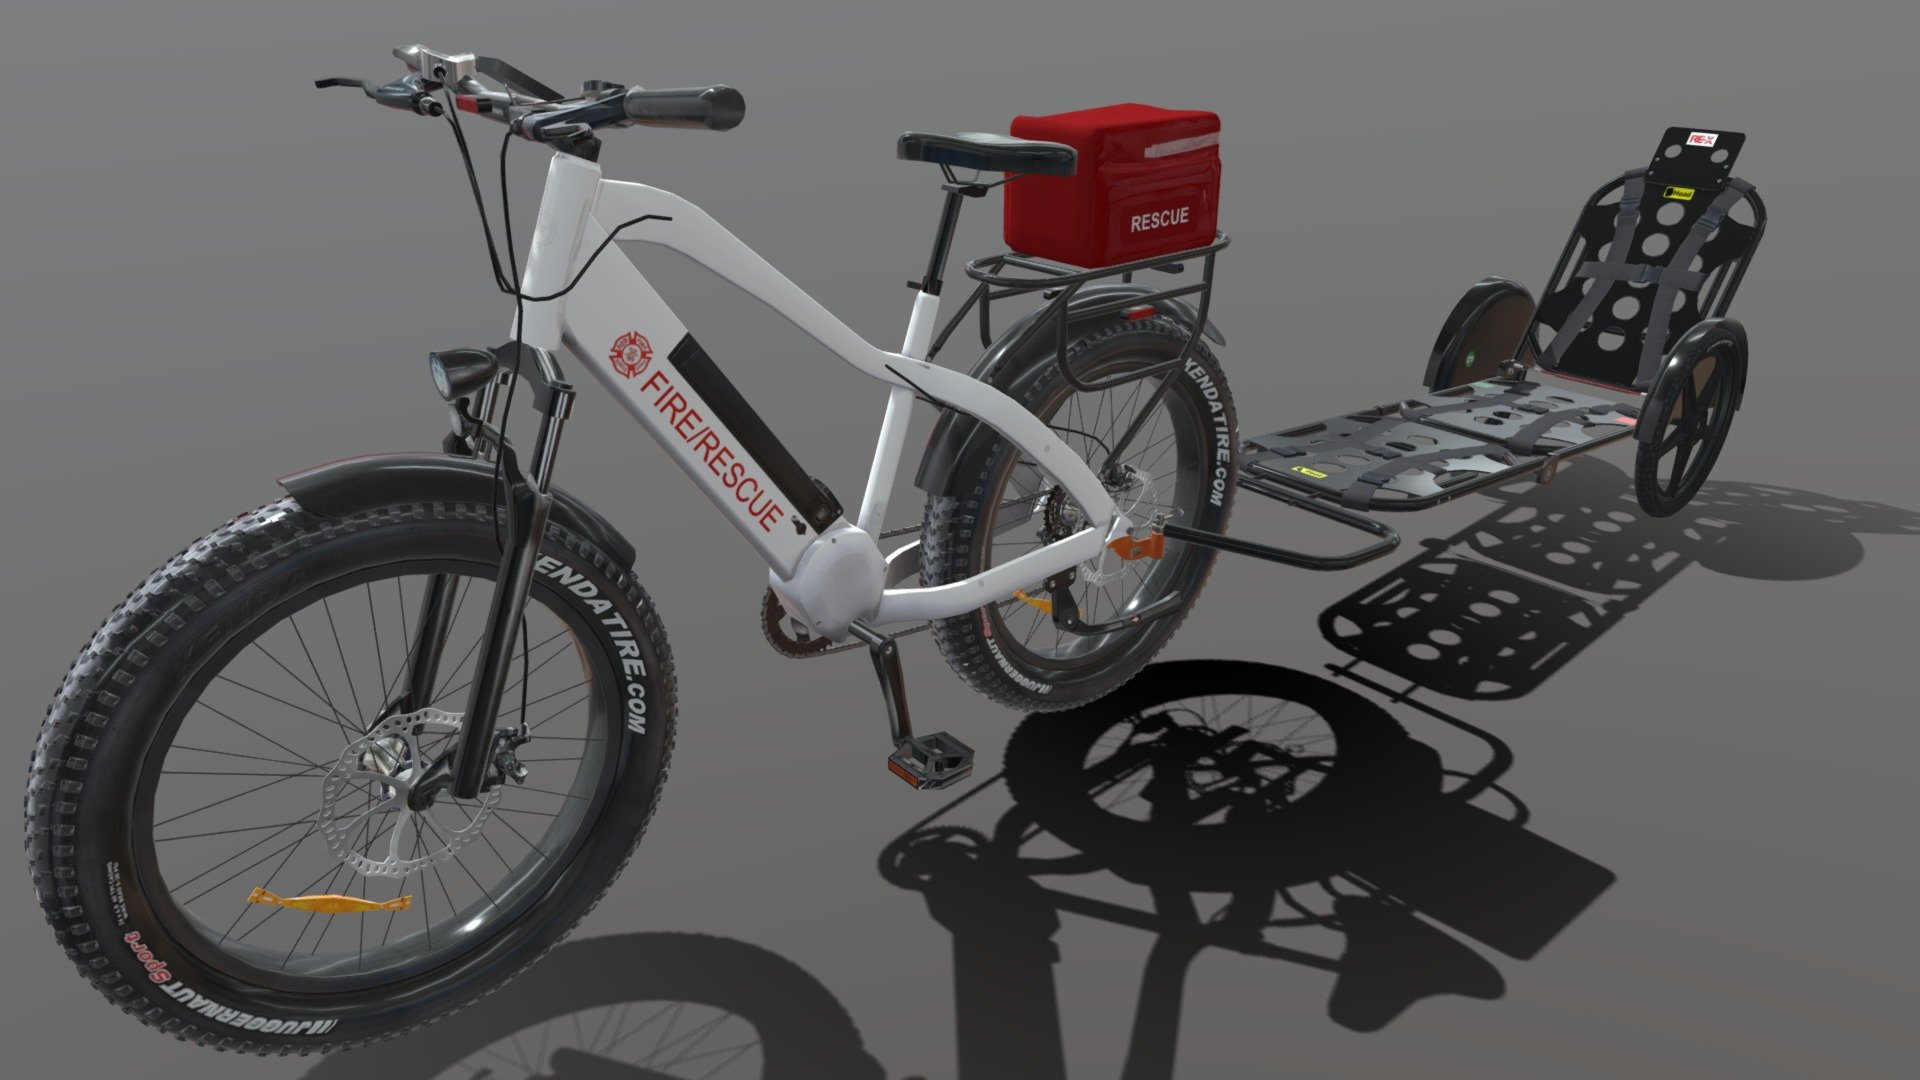 Rescue bike test - 3D model by paperscan 3d model